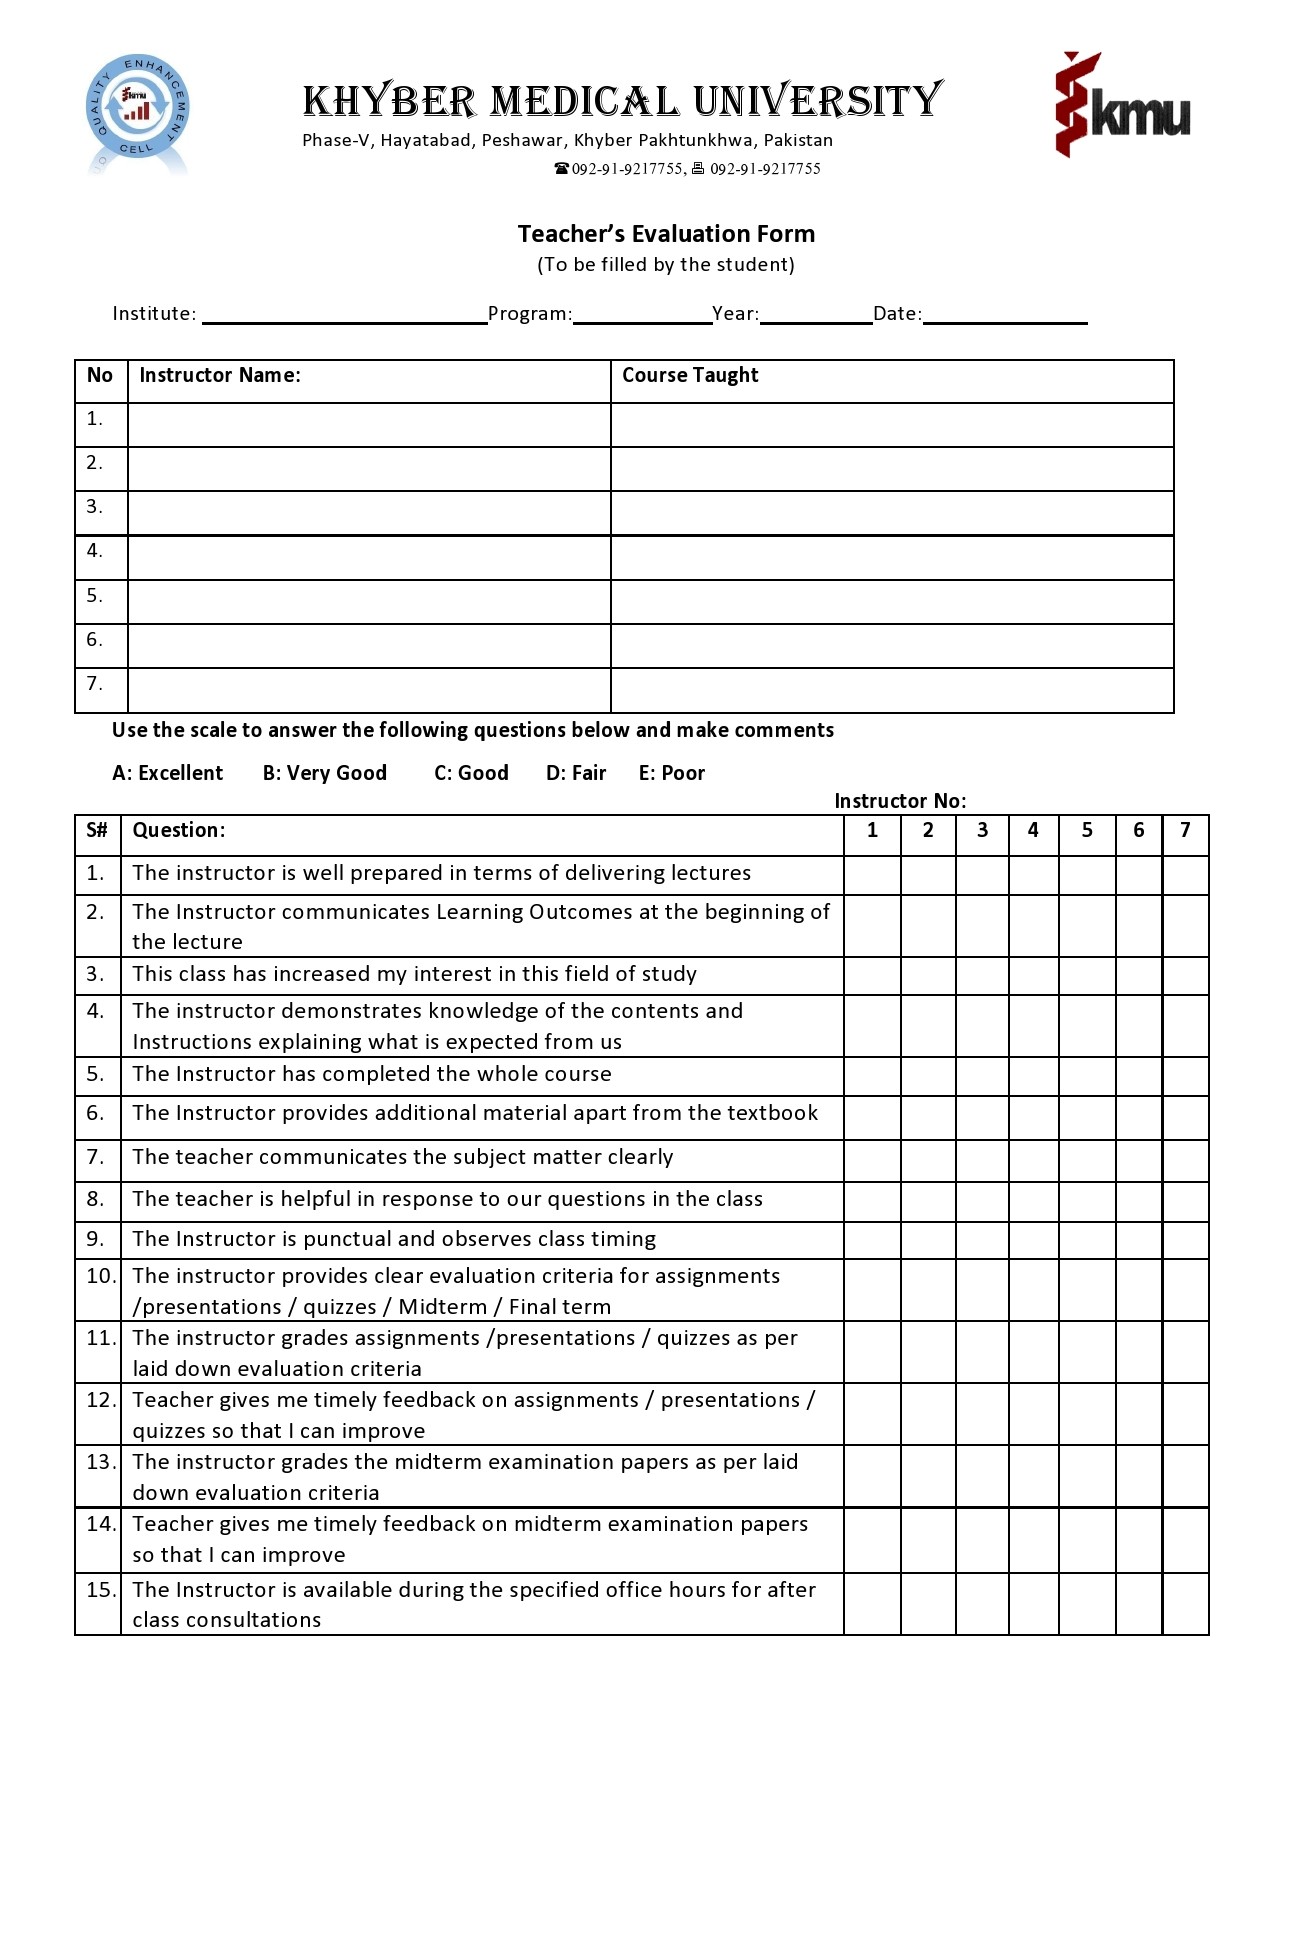 25 Printable Teacher Evaluation Forms [Free] ᐅ TemplateLab